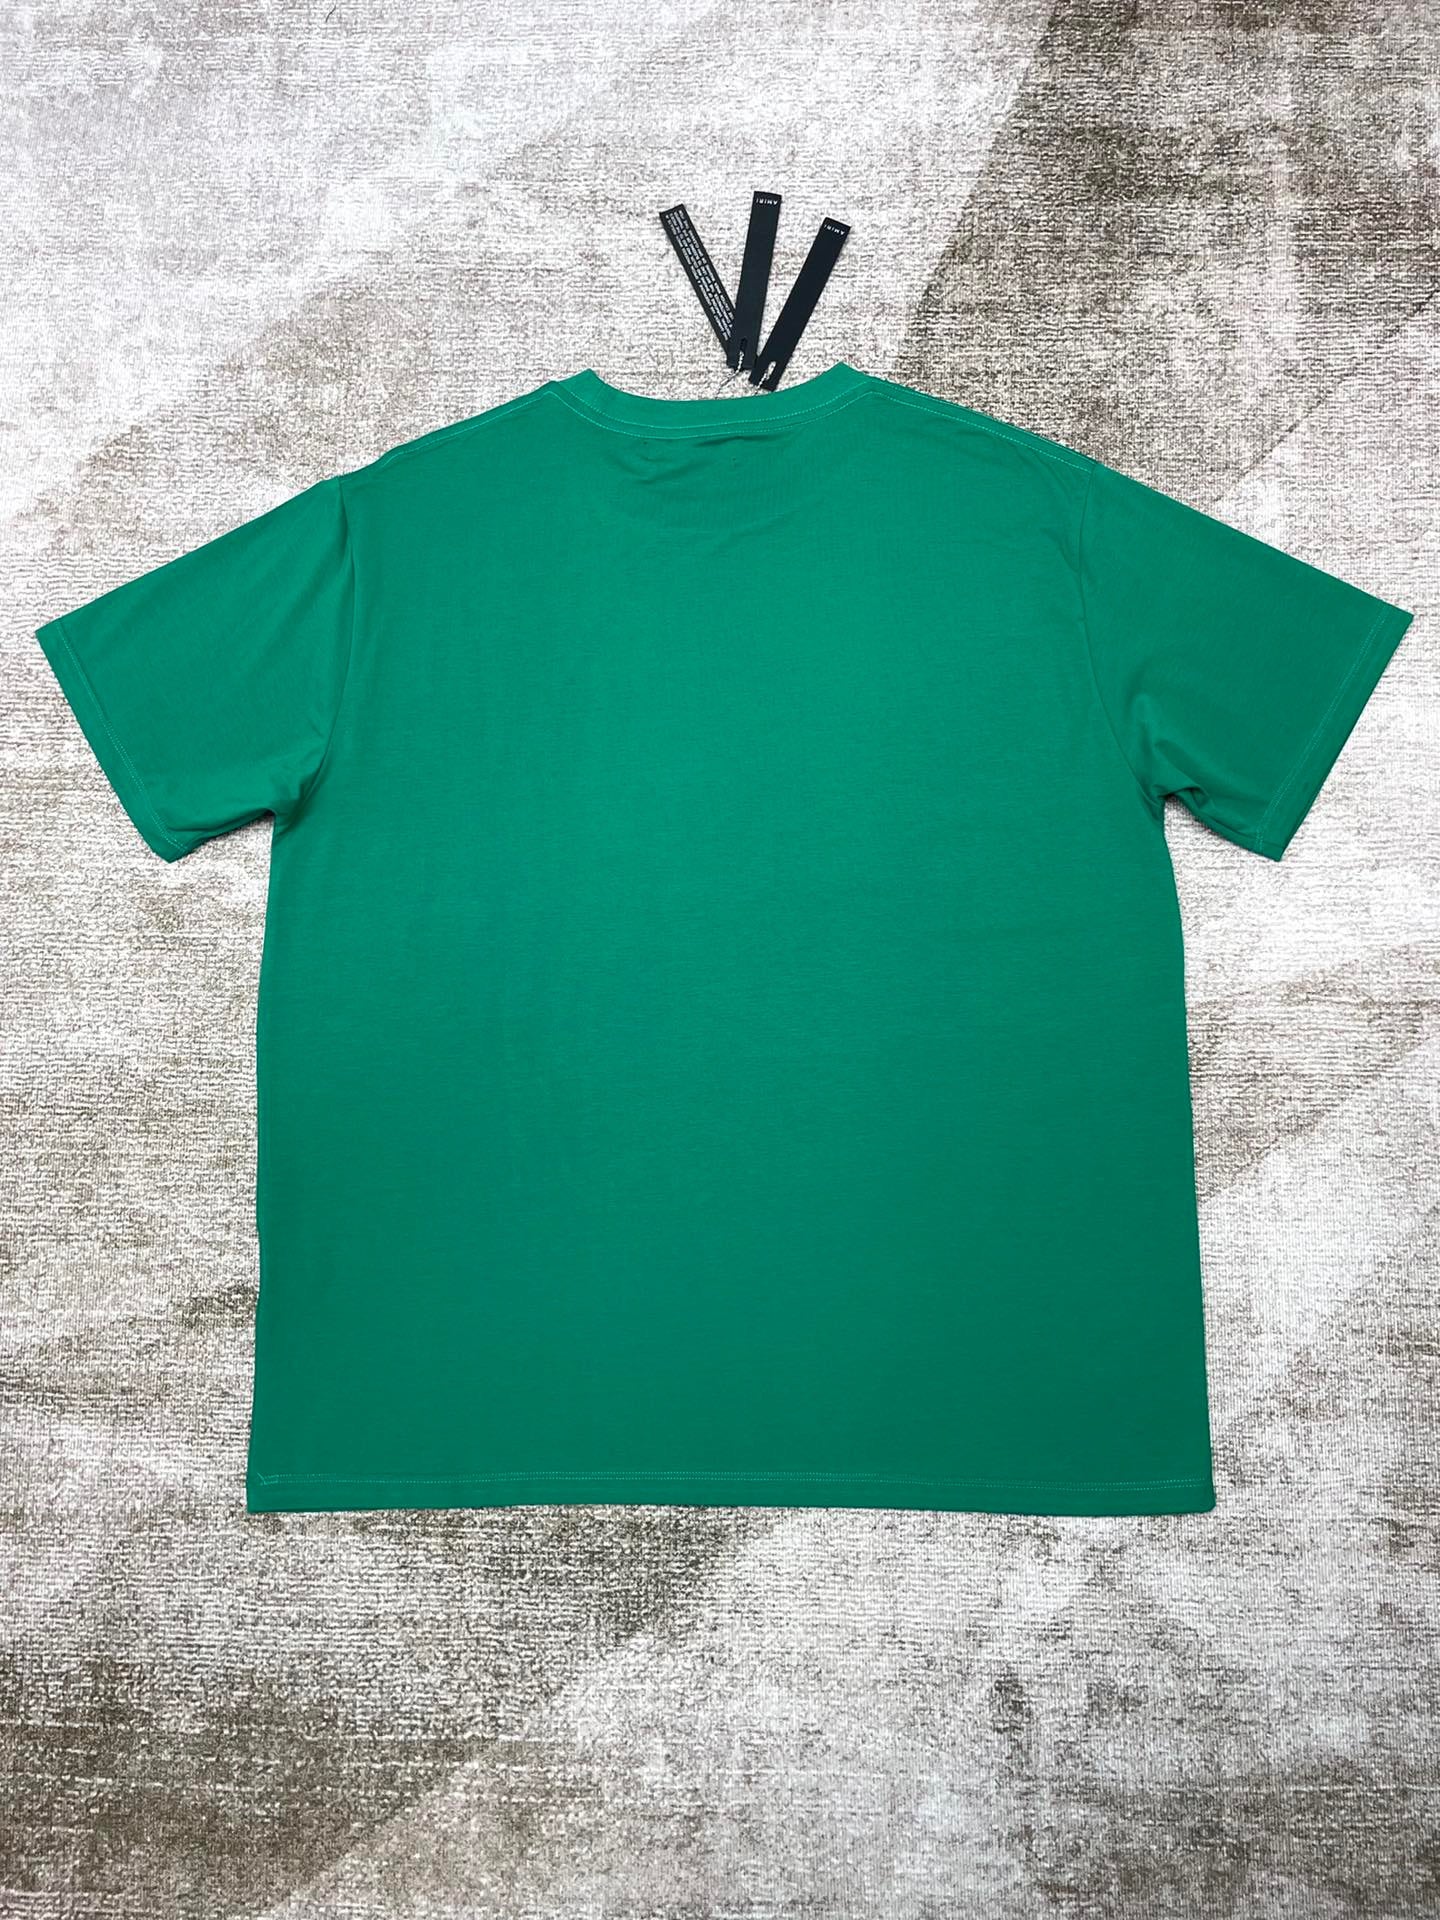 Black and Green T-shirt